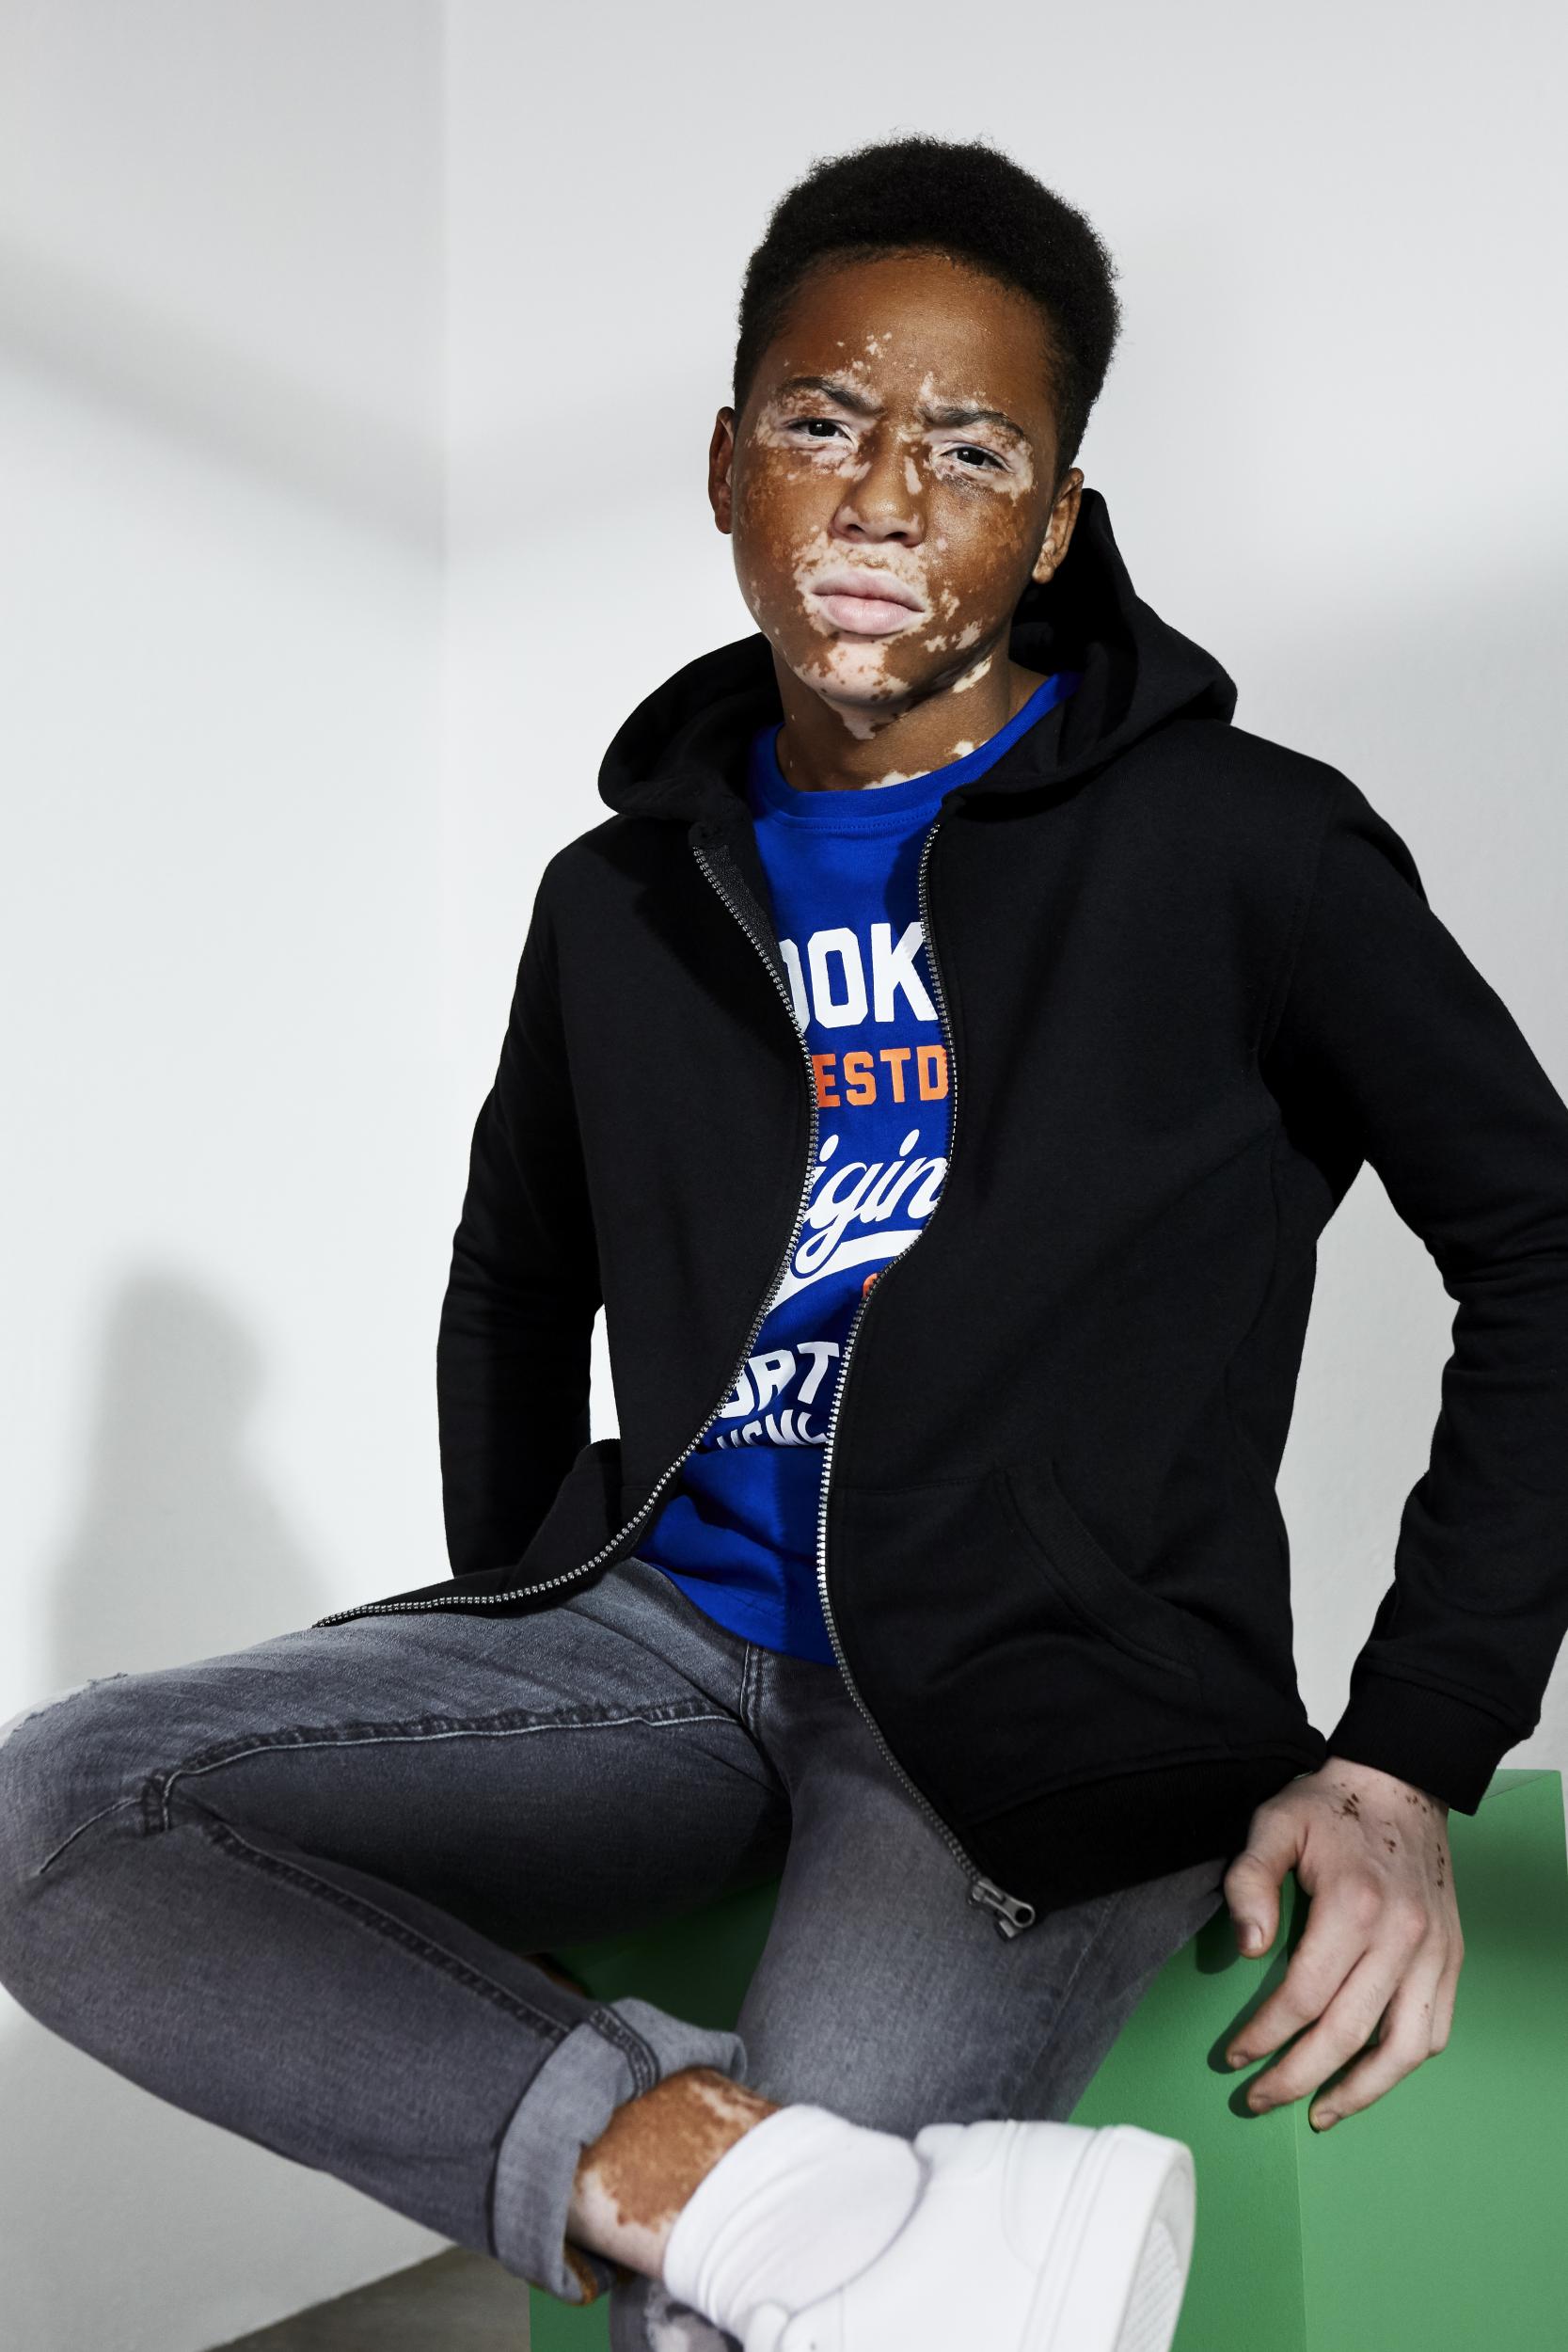 The campaign featuring a boy with vitiligo has been described as 'super beautiful'